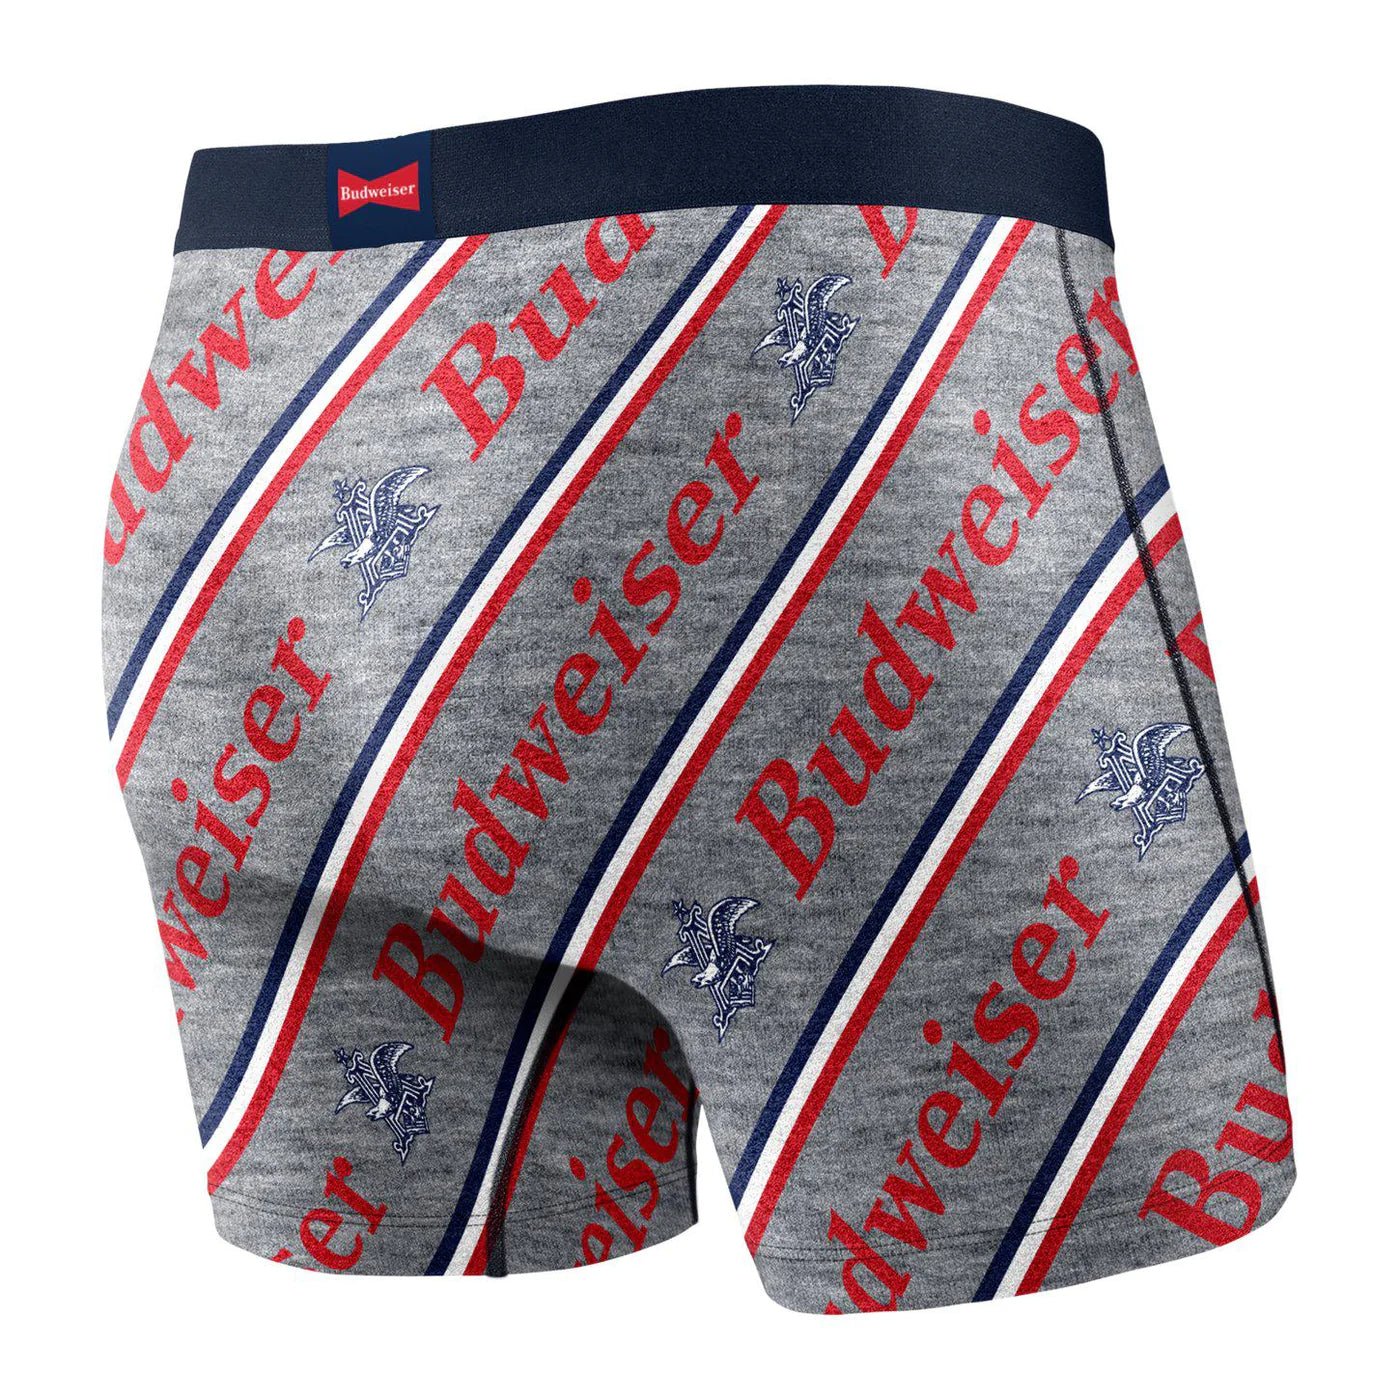 SAXX Men's Ultra Boxer Brief Underwear - Grey Criss Cross Budweiser –  Seliga Shoes